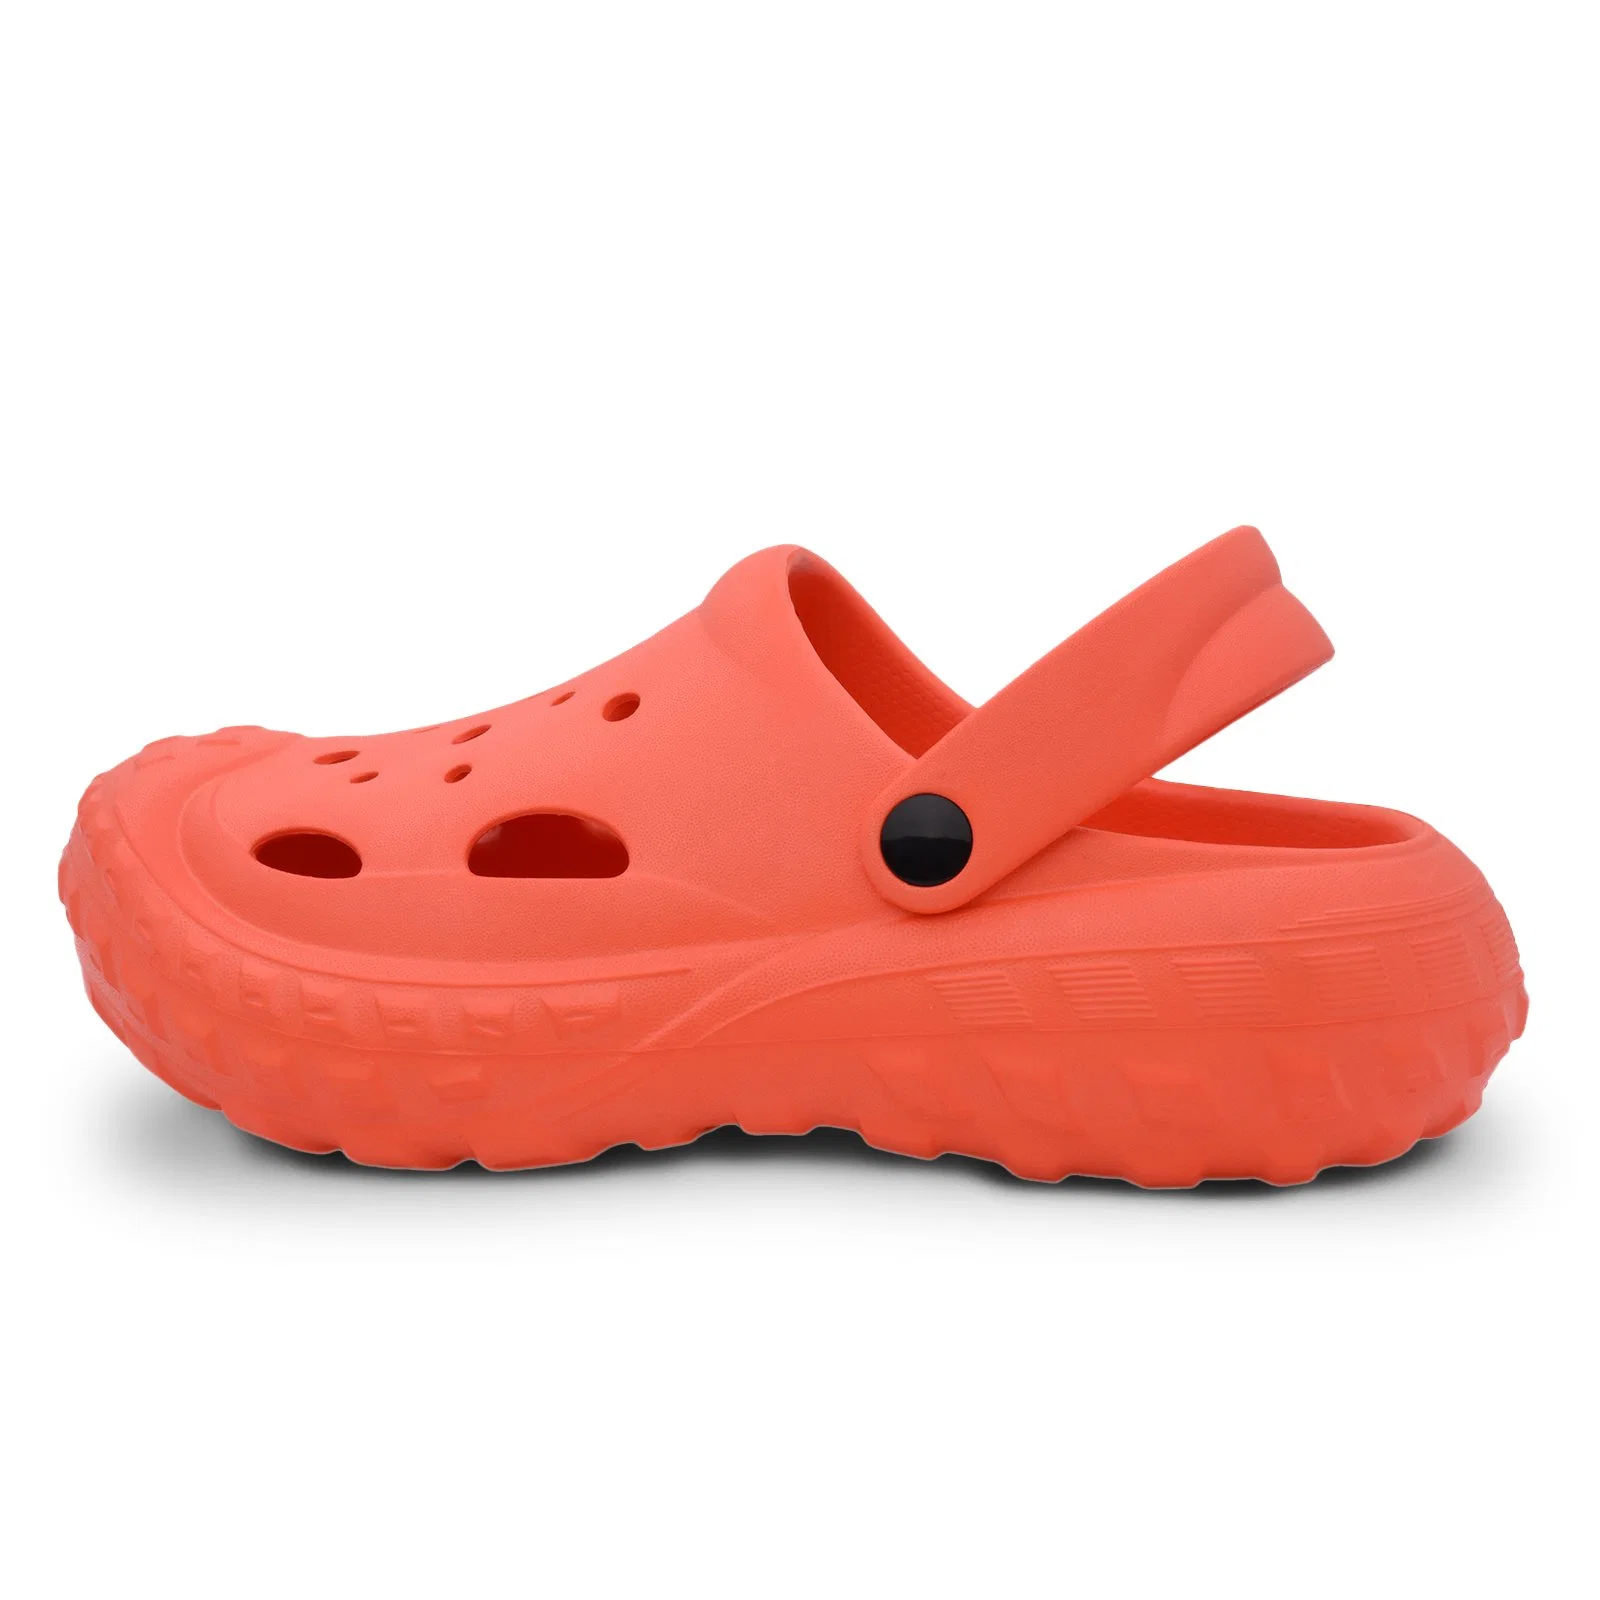 Sandalias de playa EVA Super suave espuma transpirable Quick-Drying Unisex corredores zapatos